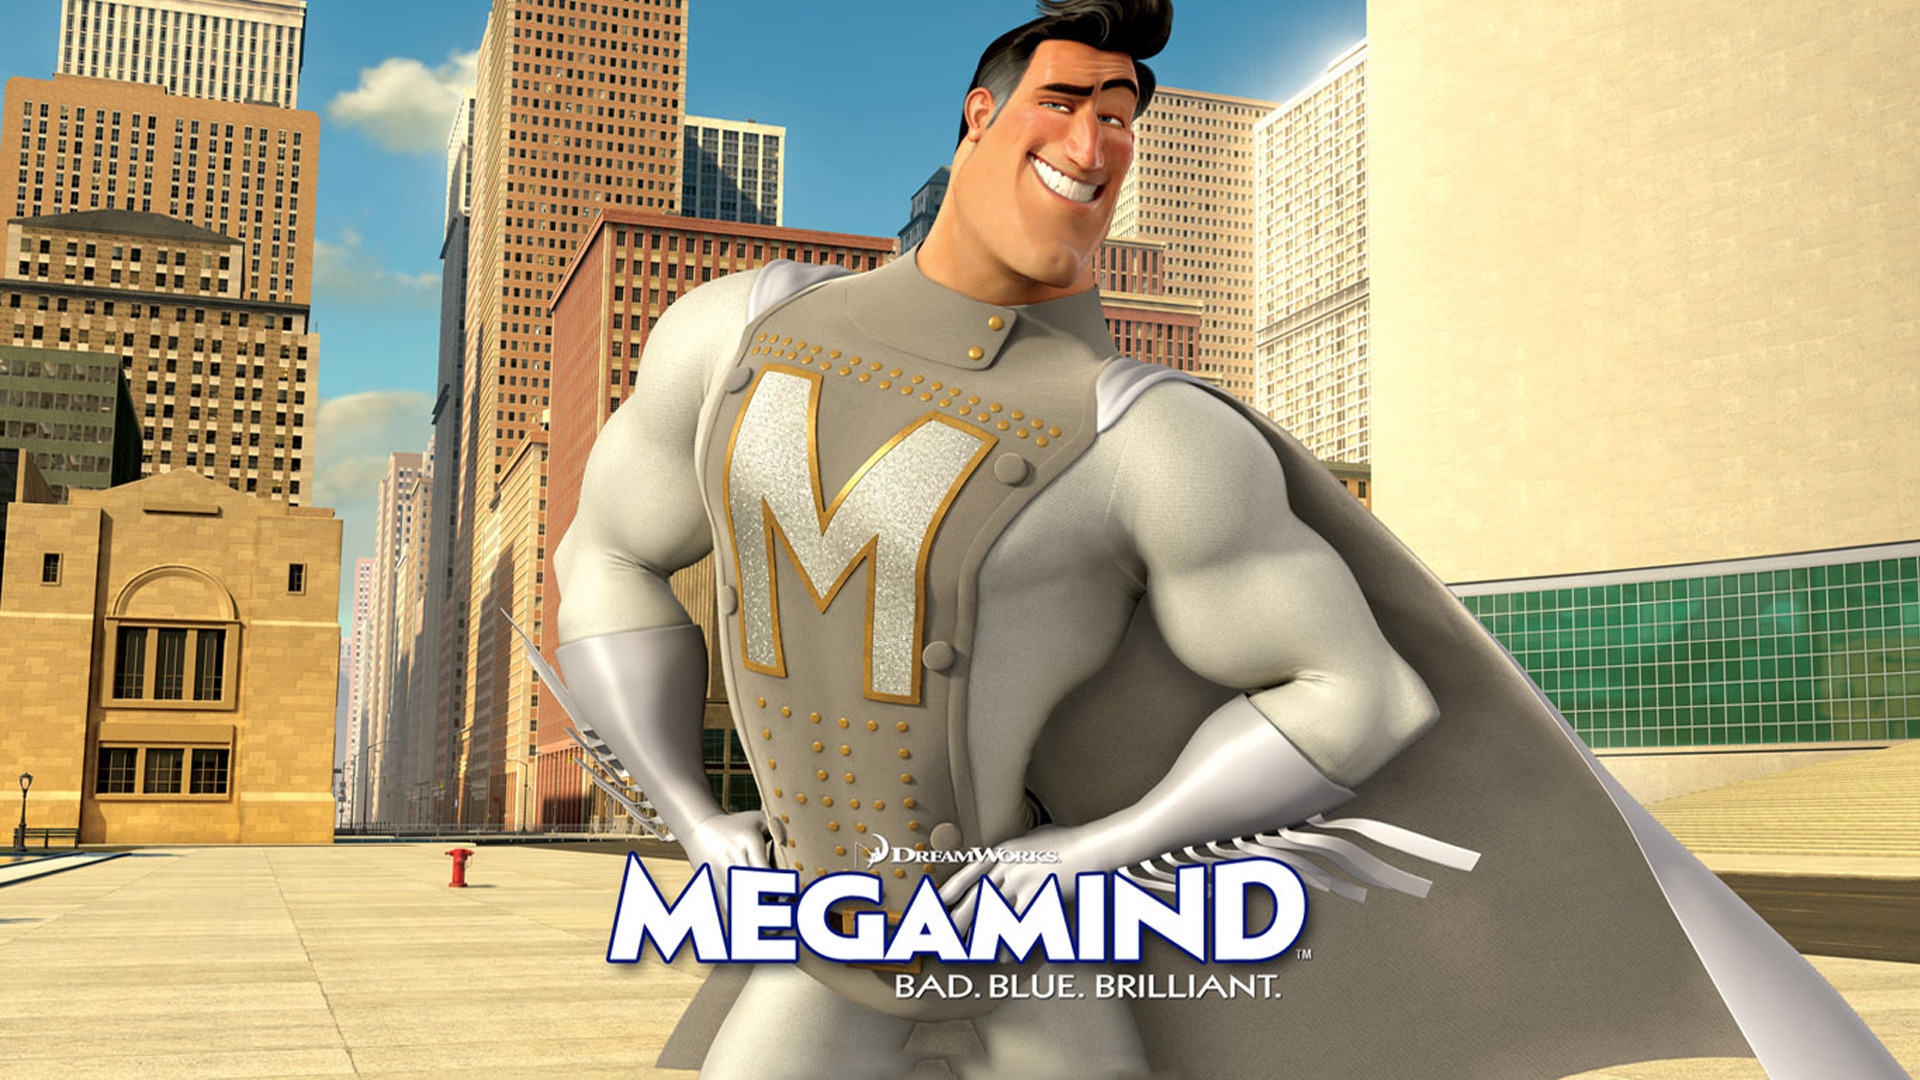 Megamind Metro Man for 1920 x 1080 HDTV 1080p resolution